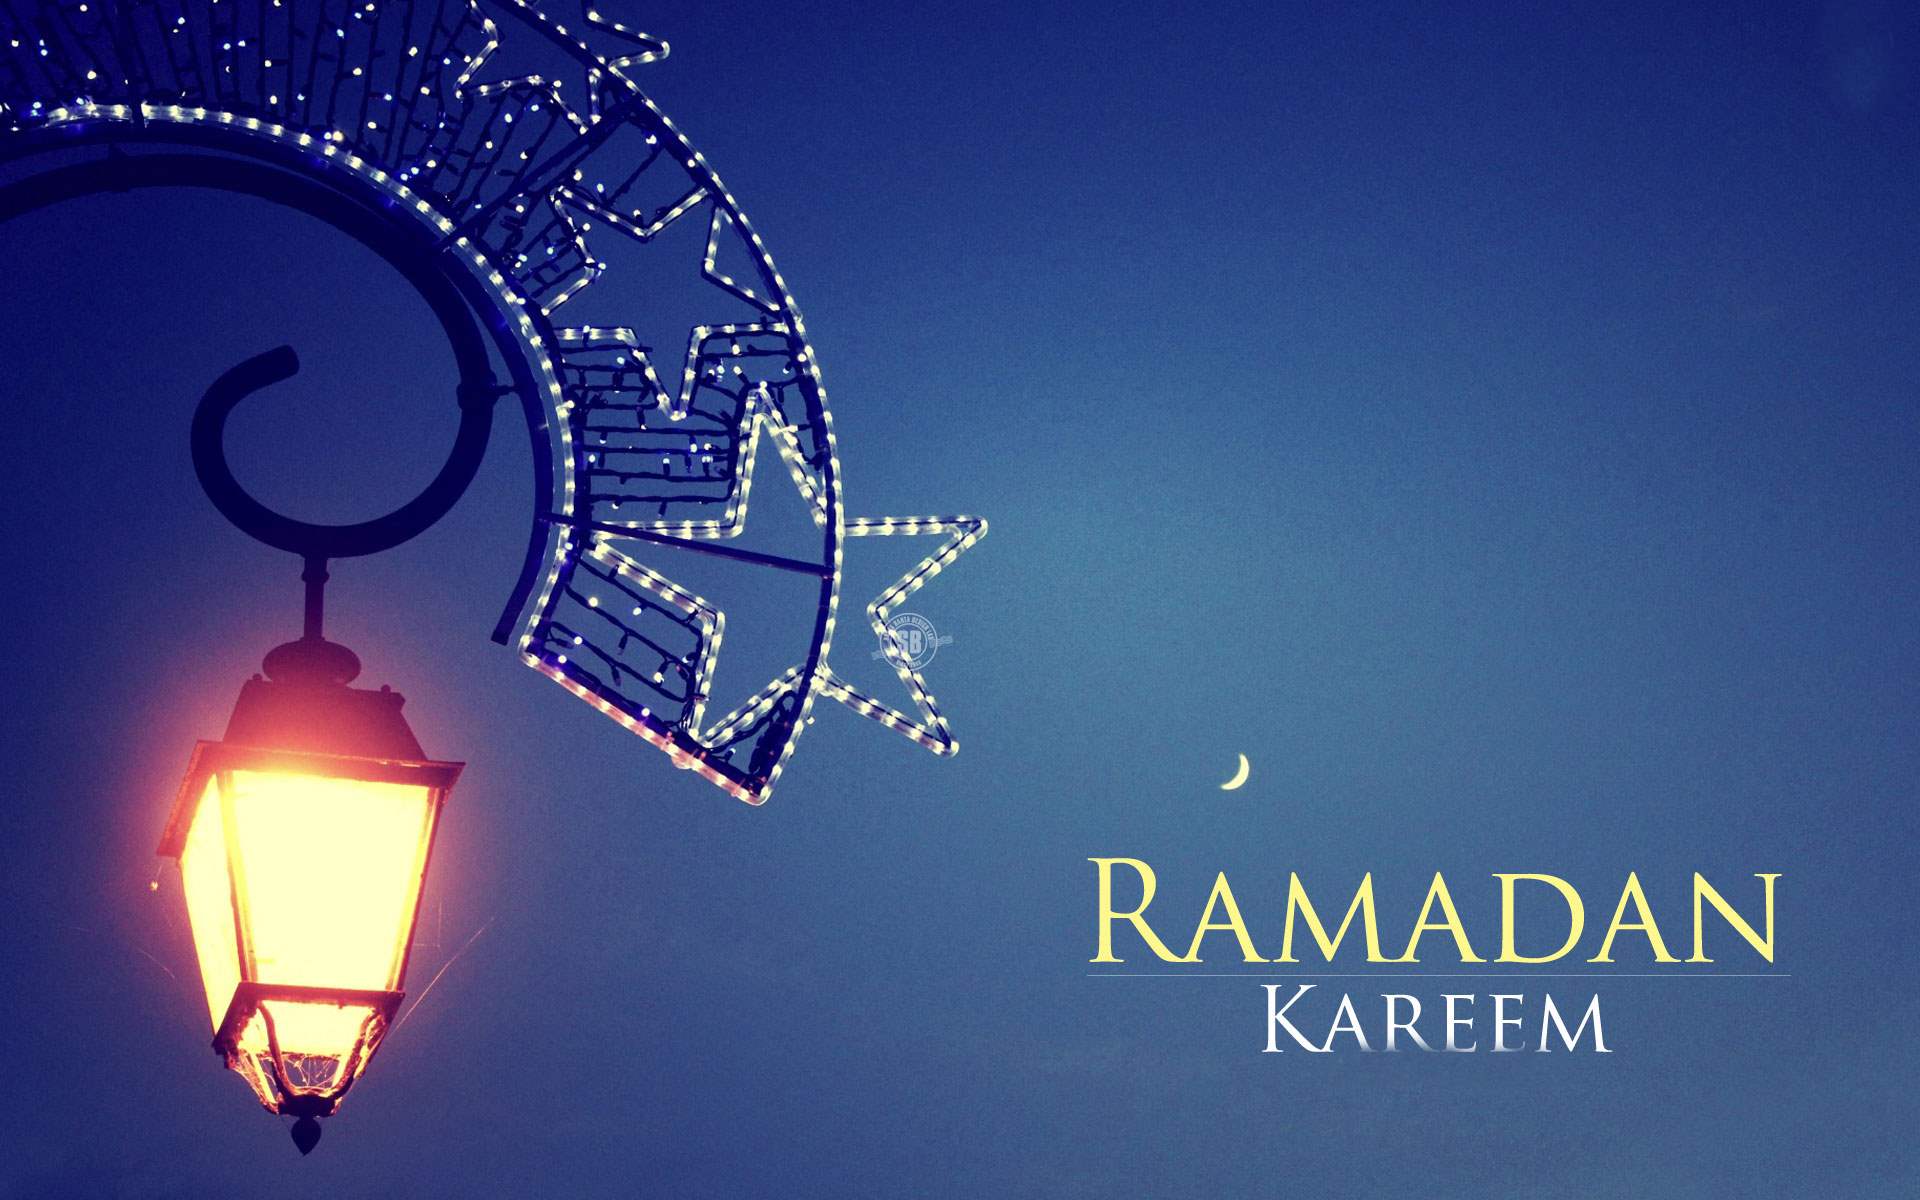 Latest Collection of Ramadan Mubarak 2015 HD Wallpapers